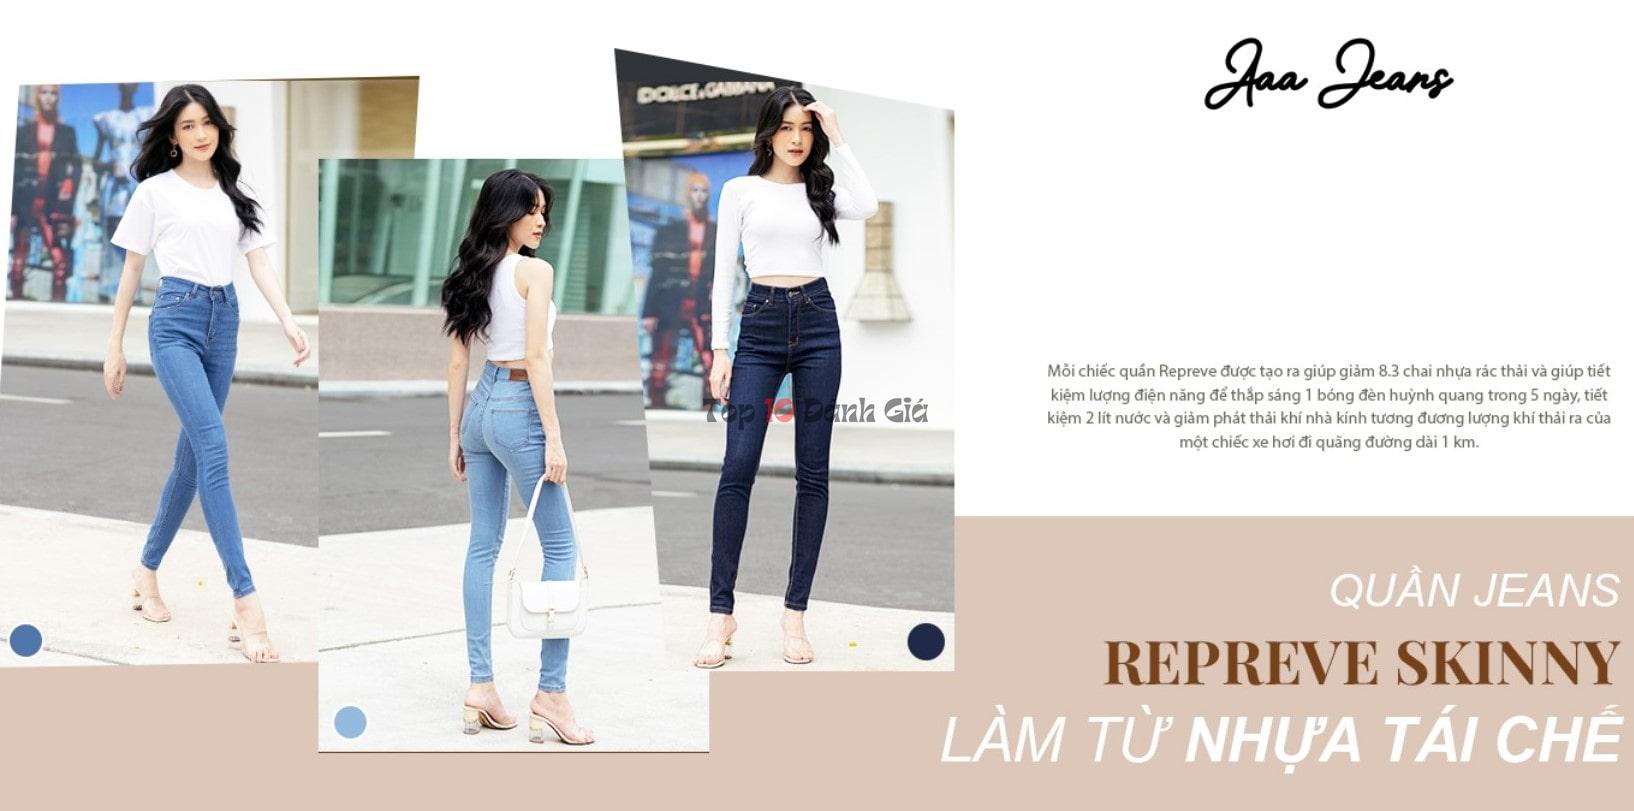 Aaa Jeans - Shop quần jean nữ chất lượng